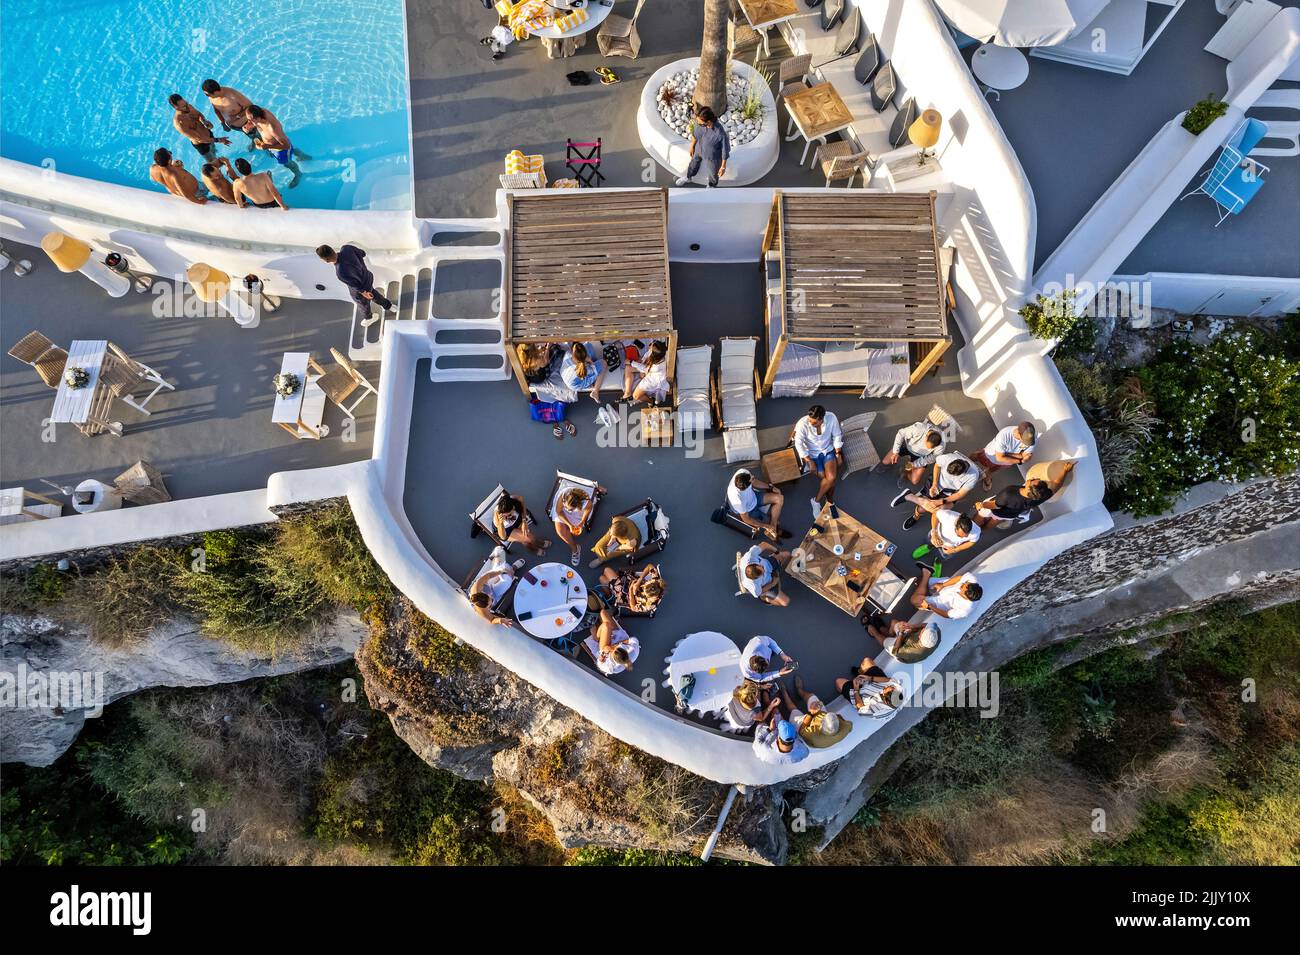 'Katikies Kirini' hotel, 'hangine over the caldera, Perivolas, Oia village, Santorini island, Cyclades, Greece. Stock Photo